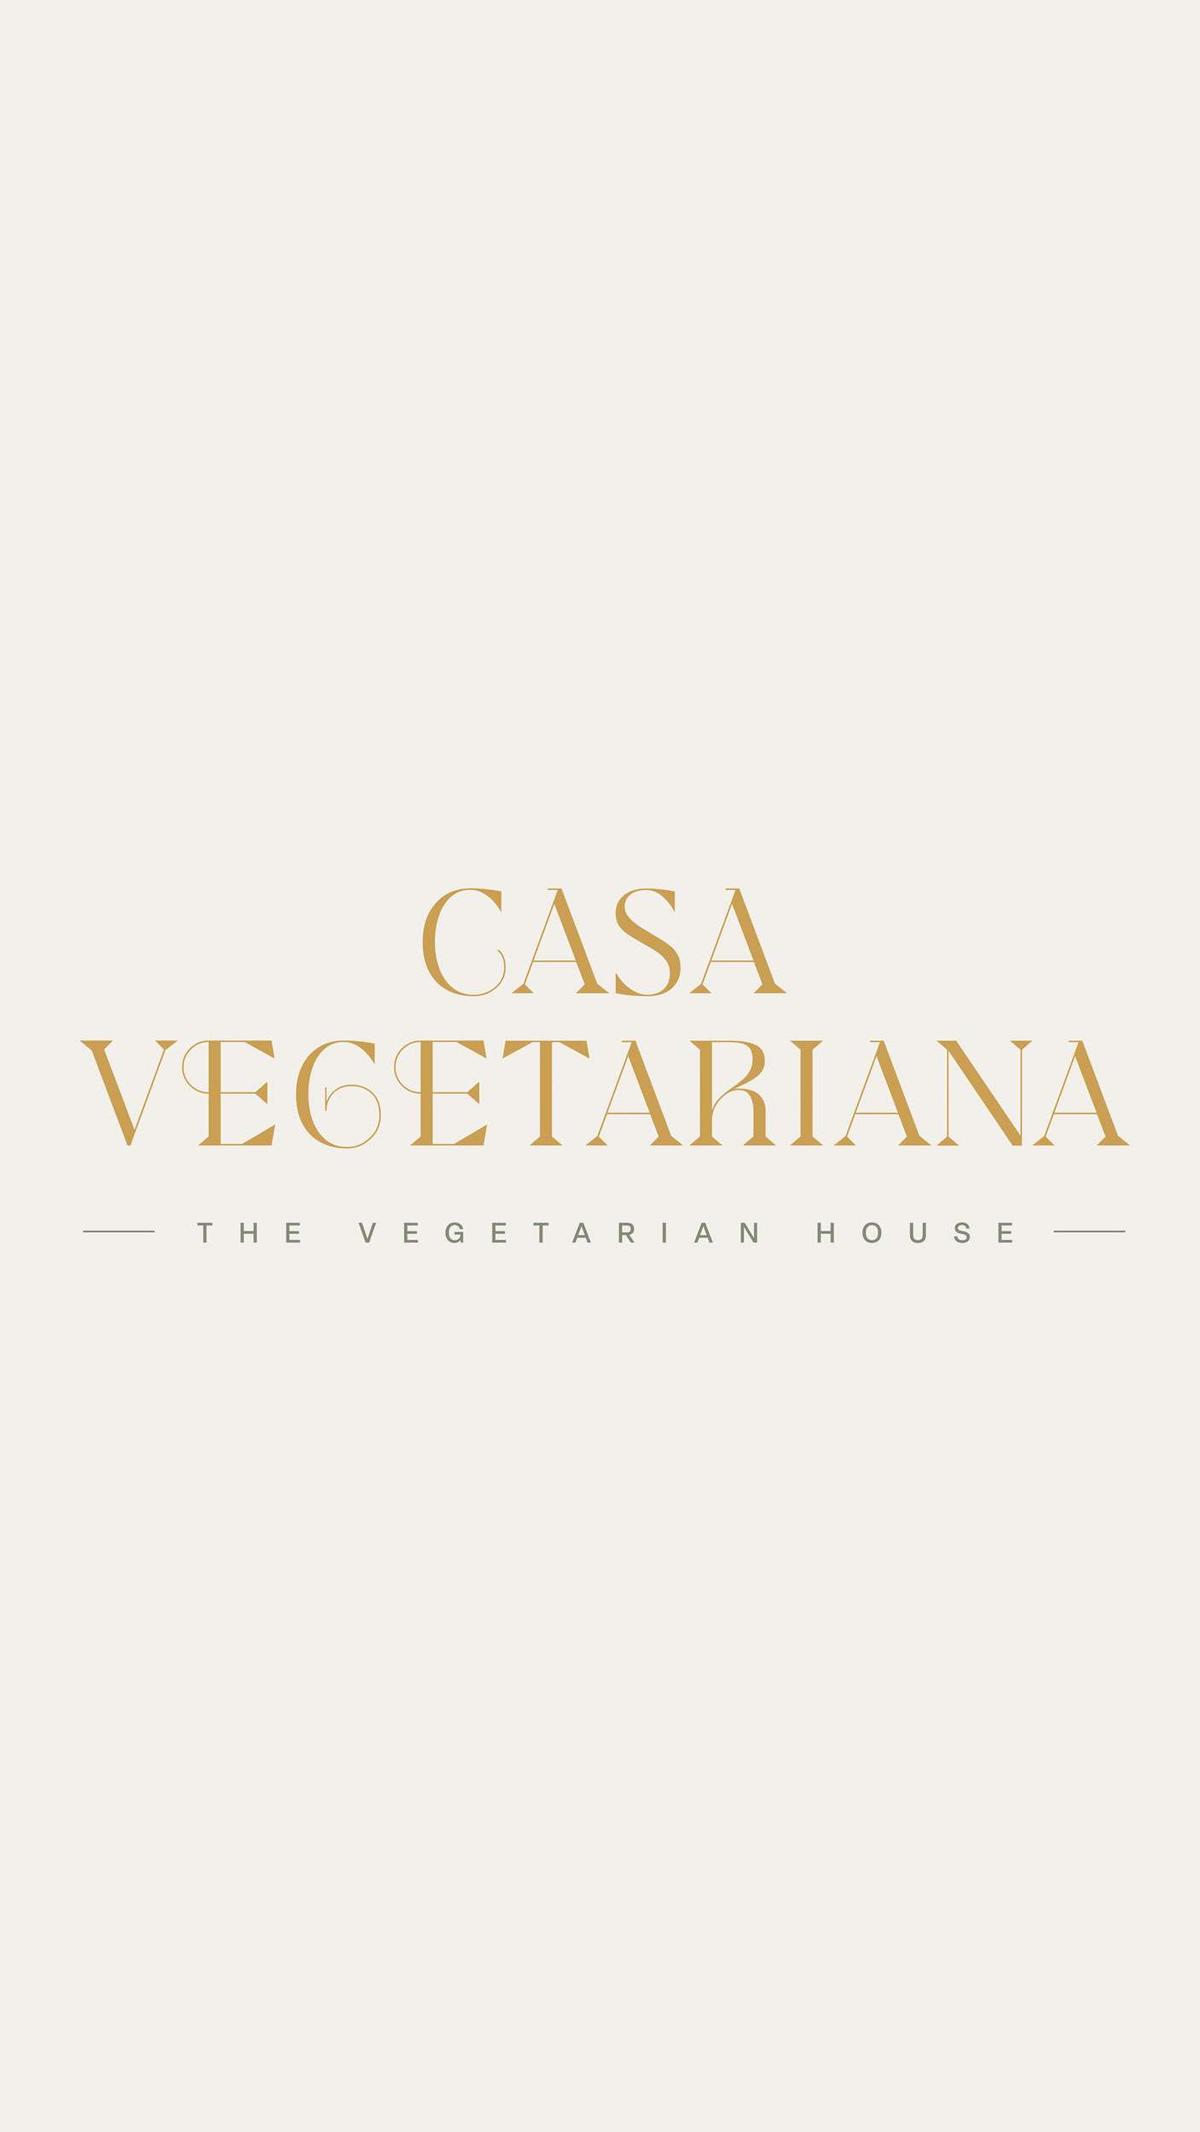 Casa Vegetariana - The Vegetarian House